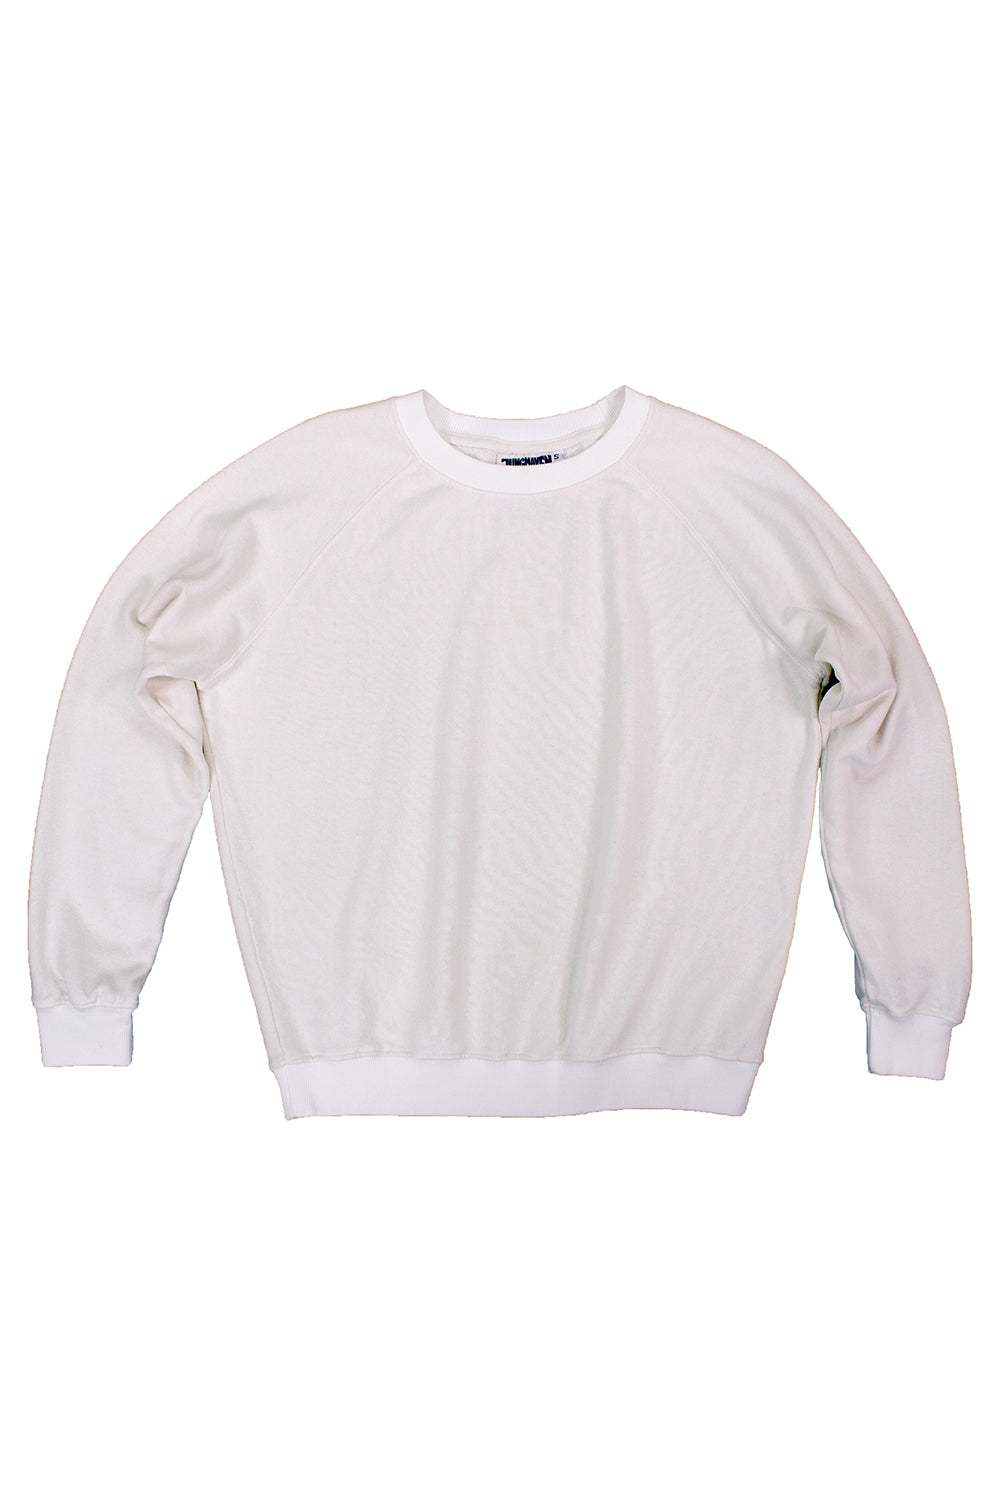 Bonfire Raglan Sweatshirt | Jungmaven Hemp Clothing & Accessories / Color: Washed White